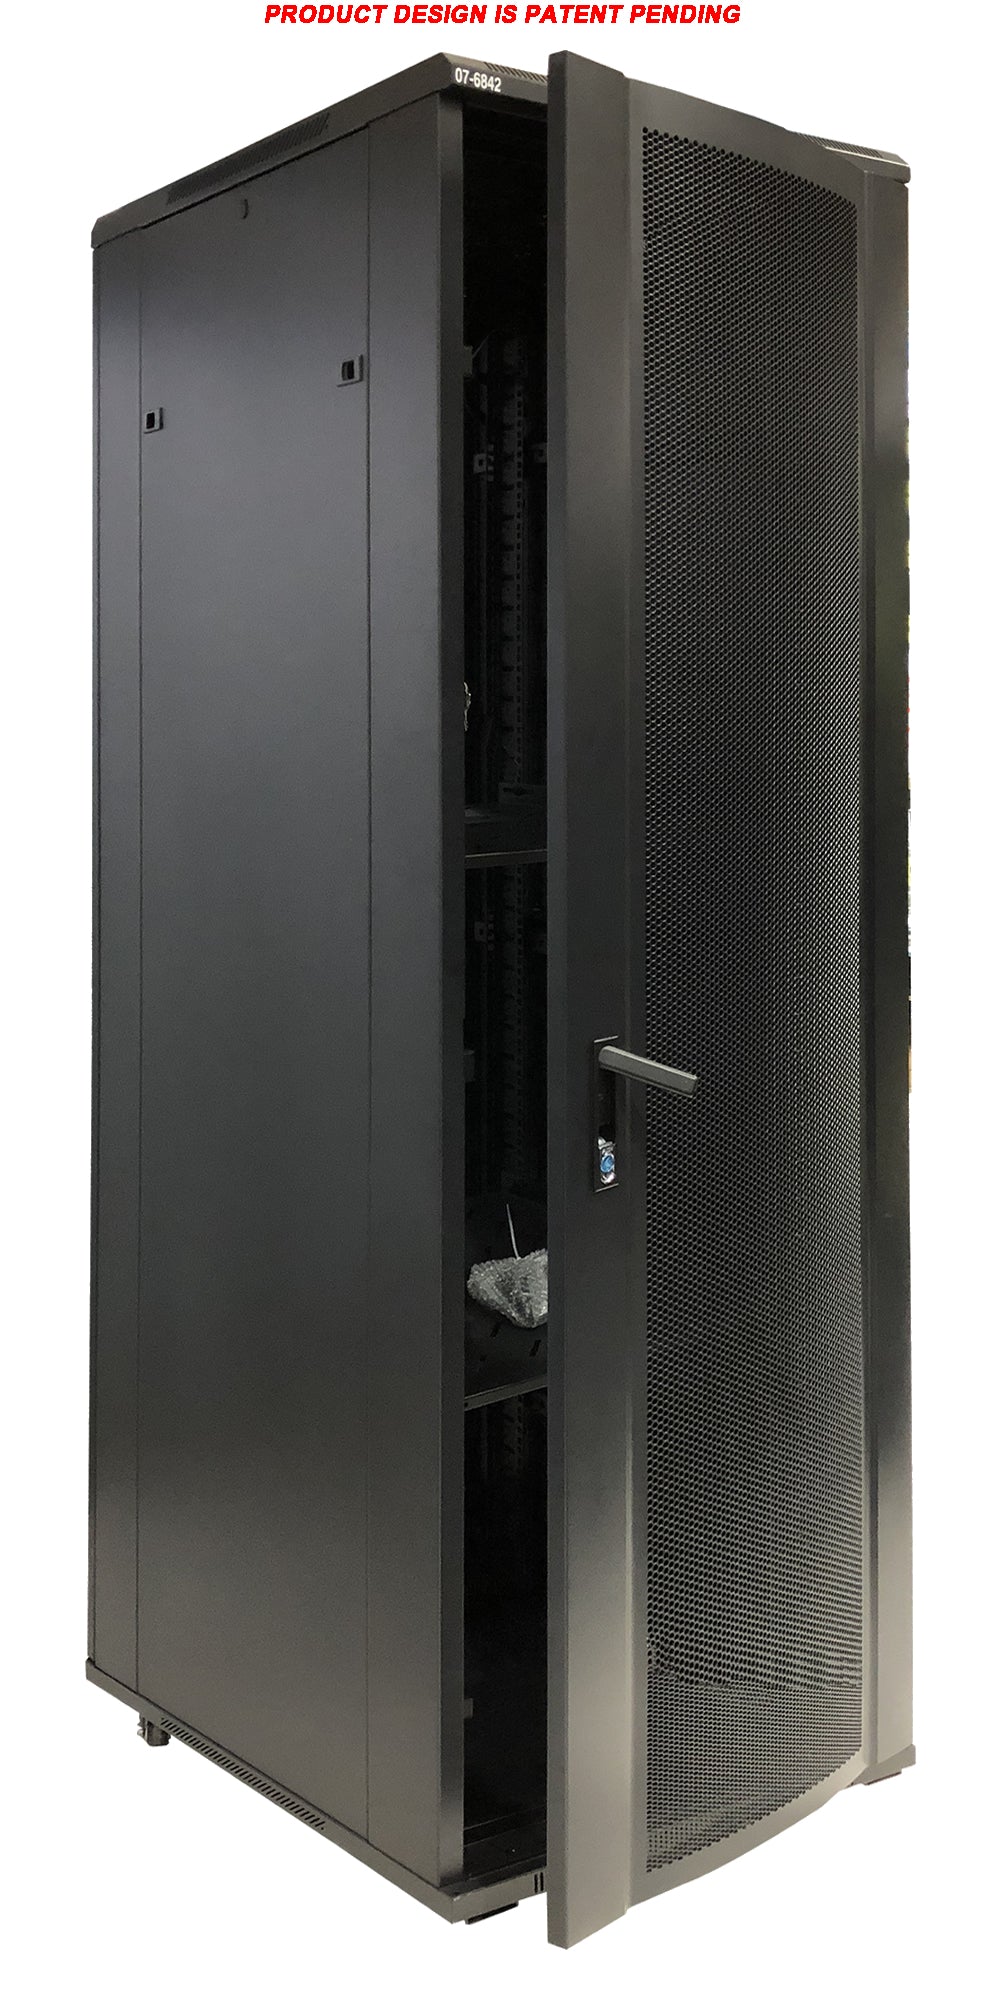 07-6842 42U 80cm(31.5 inch) Depth Server Network Cabinet - Locking Metal Door, 4 Fans, 2 Shelves, Heavy Duty Casters with Brake